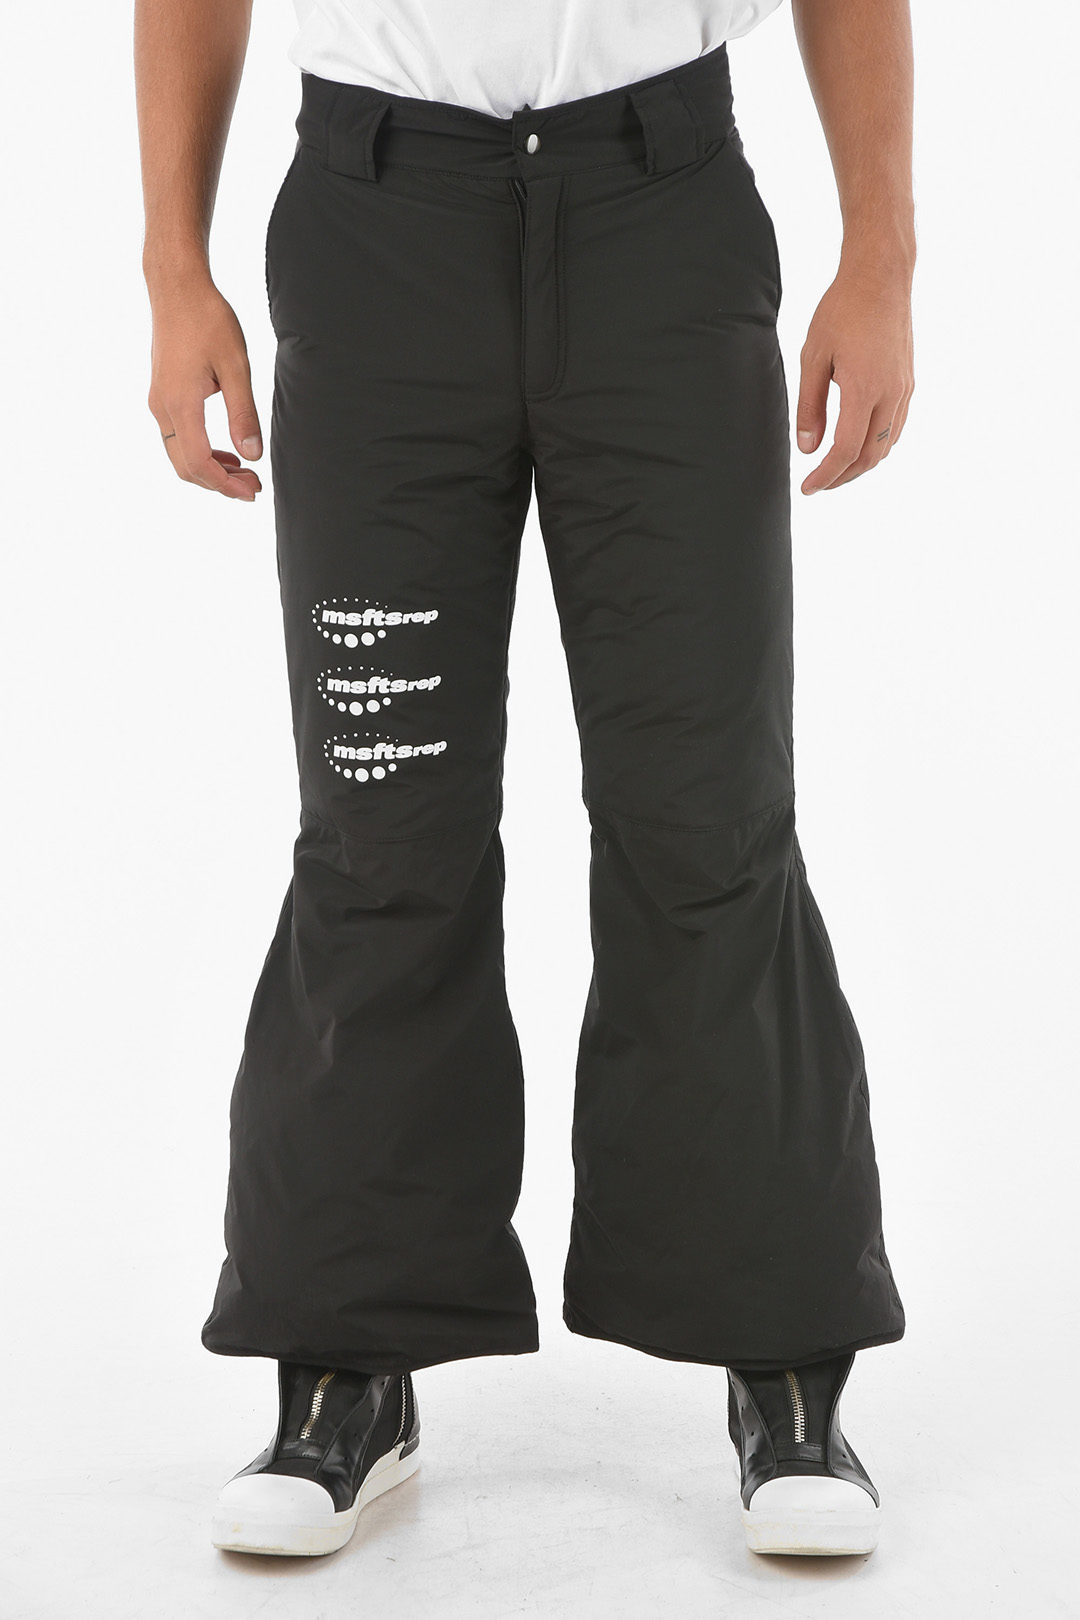 MSFTSrep Pantaloni da Neve Imbottiti a Tinta Unita con Logo a Contrasto uomo  - Glamood Outlet